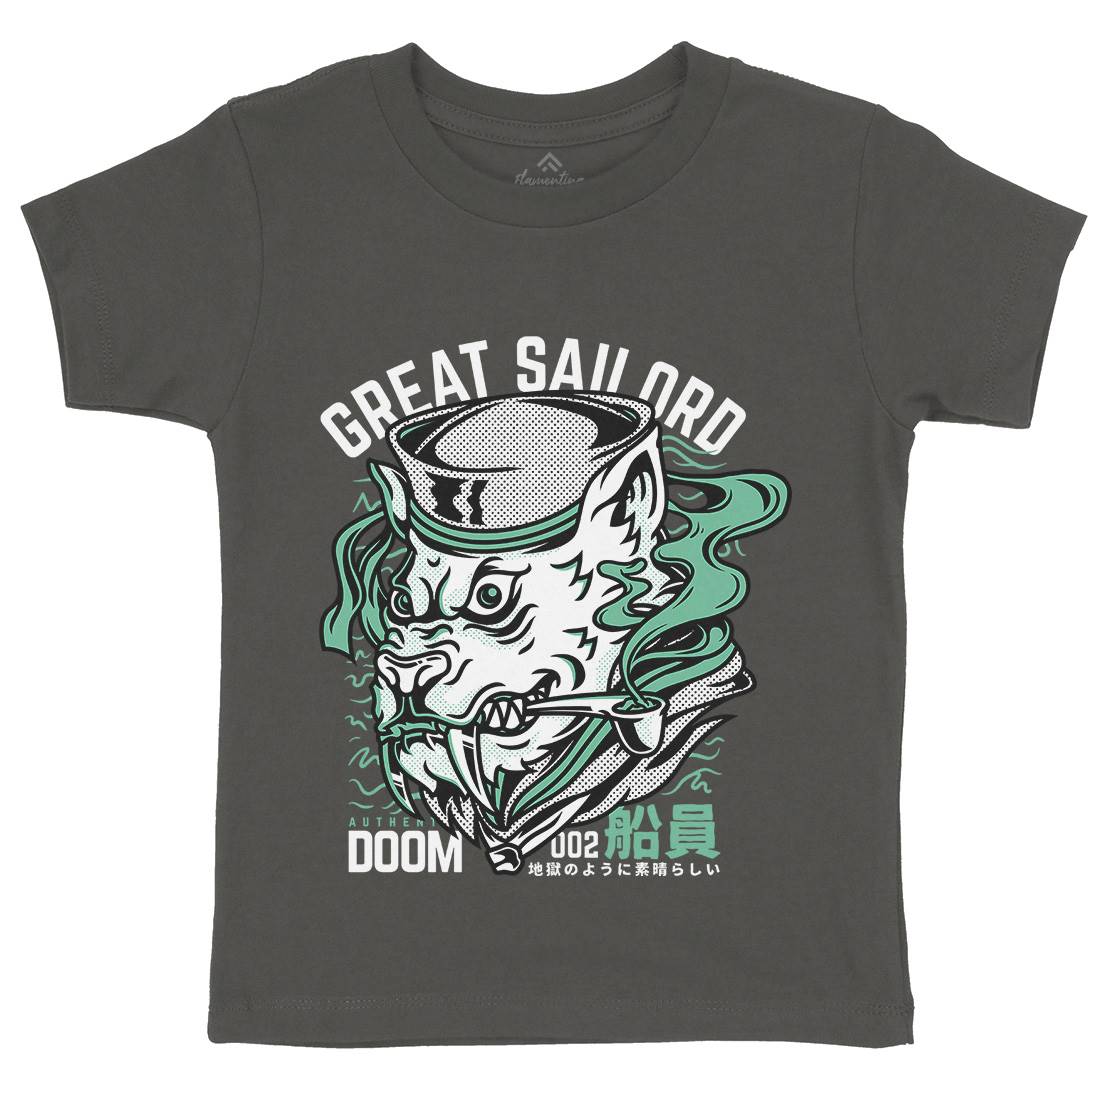 Great Sailord Kids Crew Neck T-Shirt Navy D601